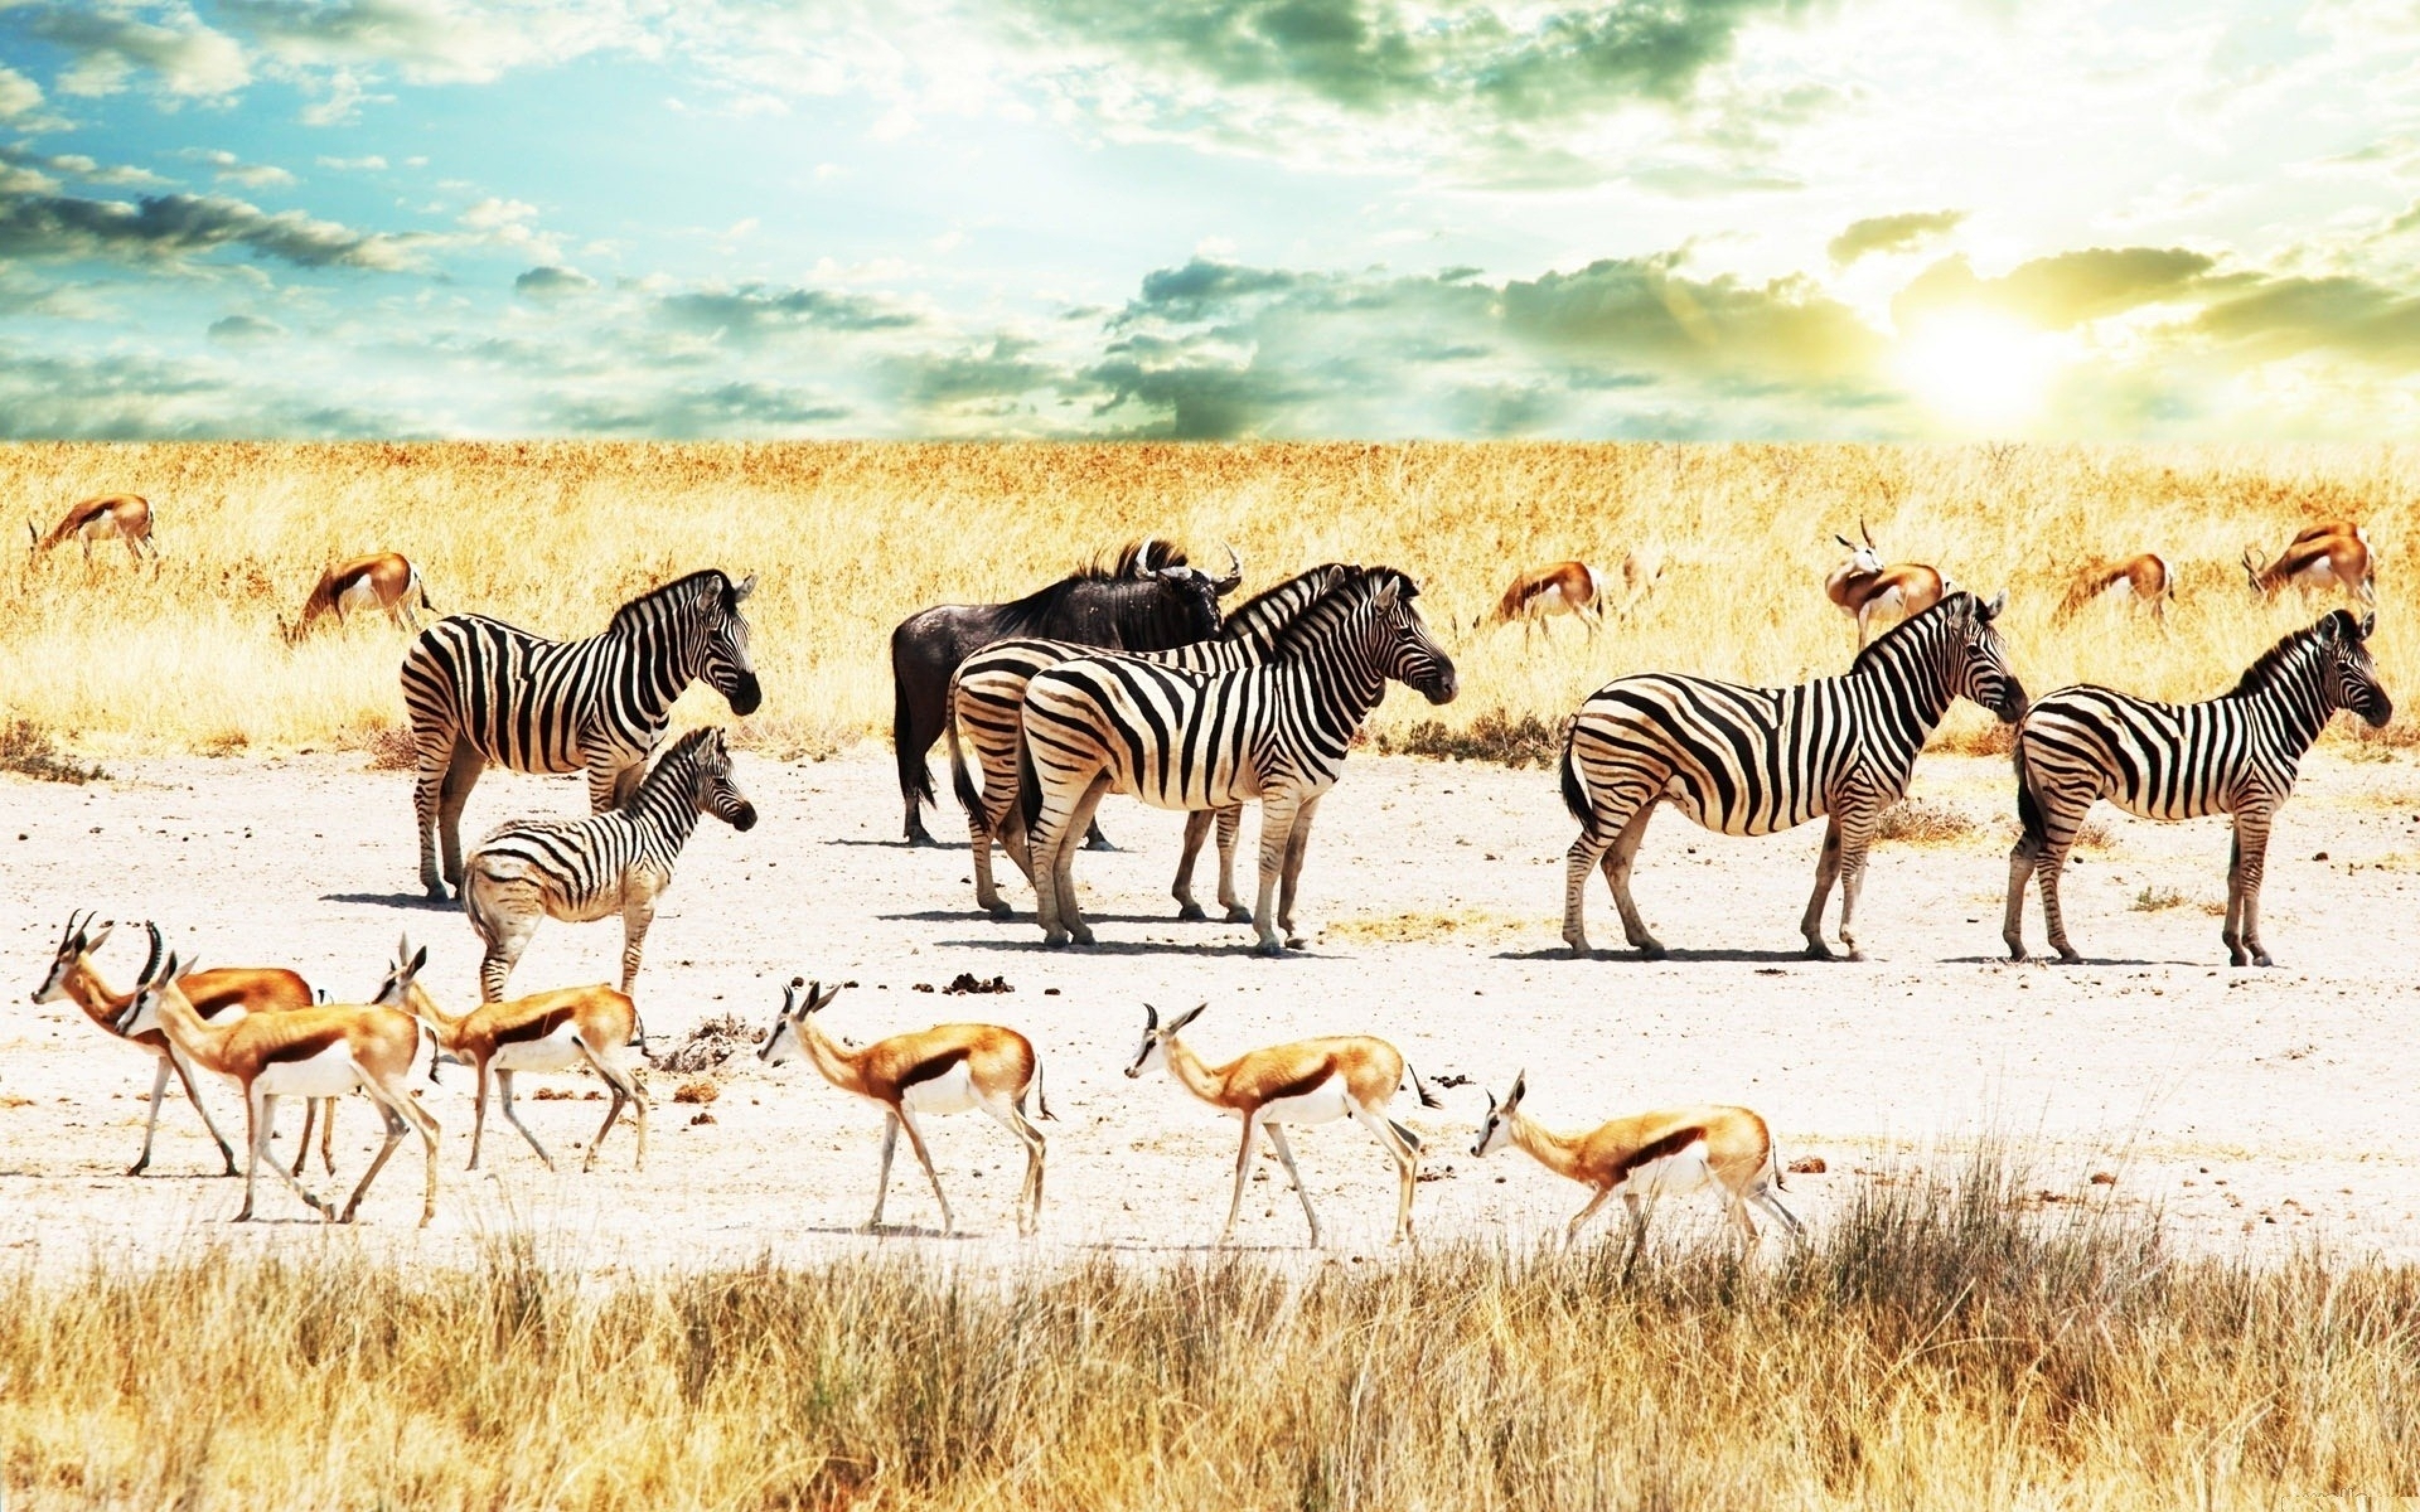 Wild life 4. Саванна сафари. Животный мир саванны в Африке. Зебры в саванне. Африка Саванна дикий мир животных.